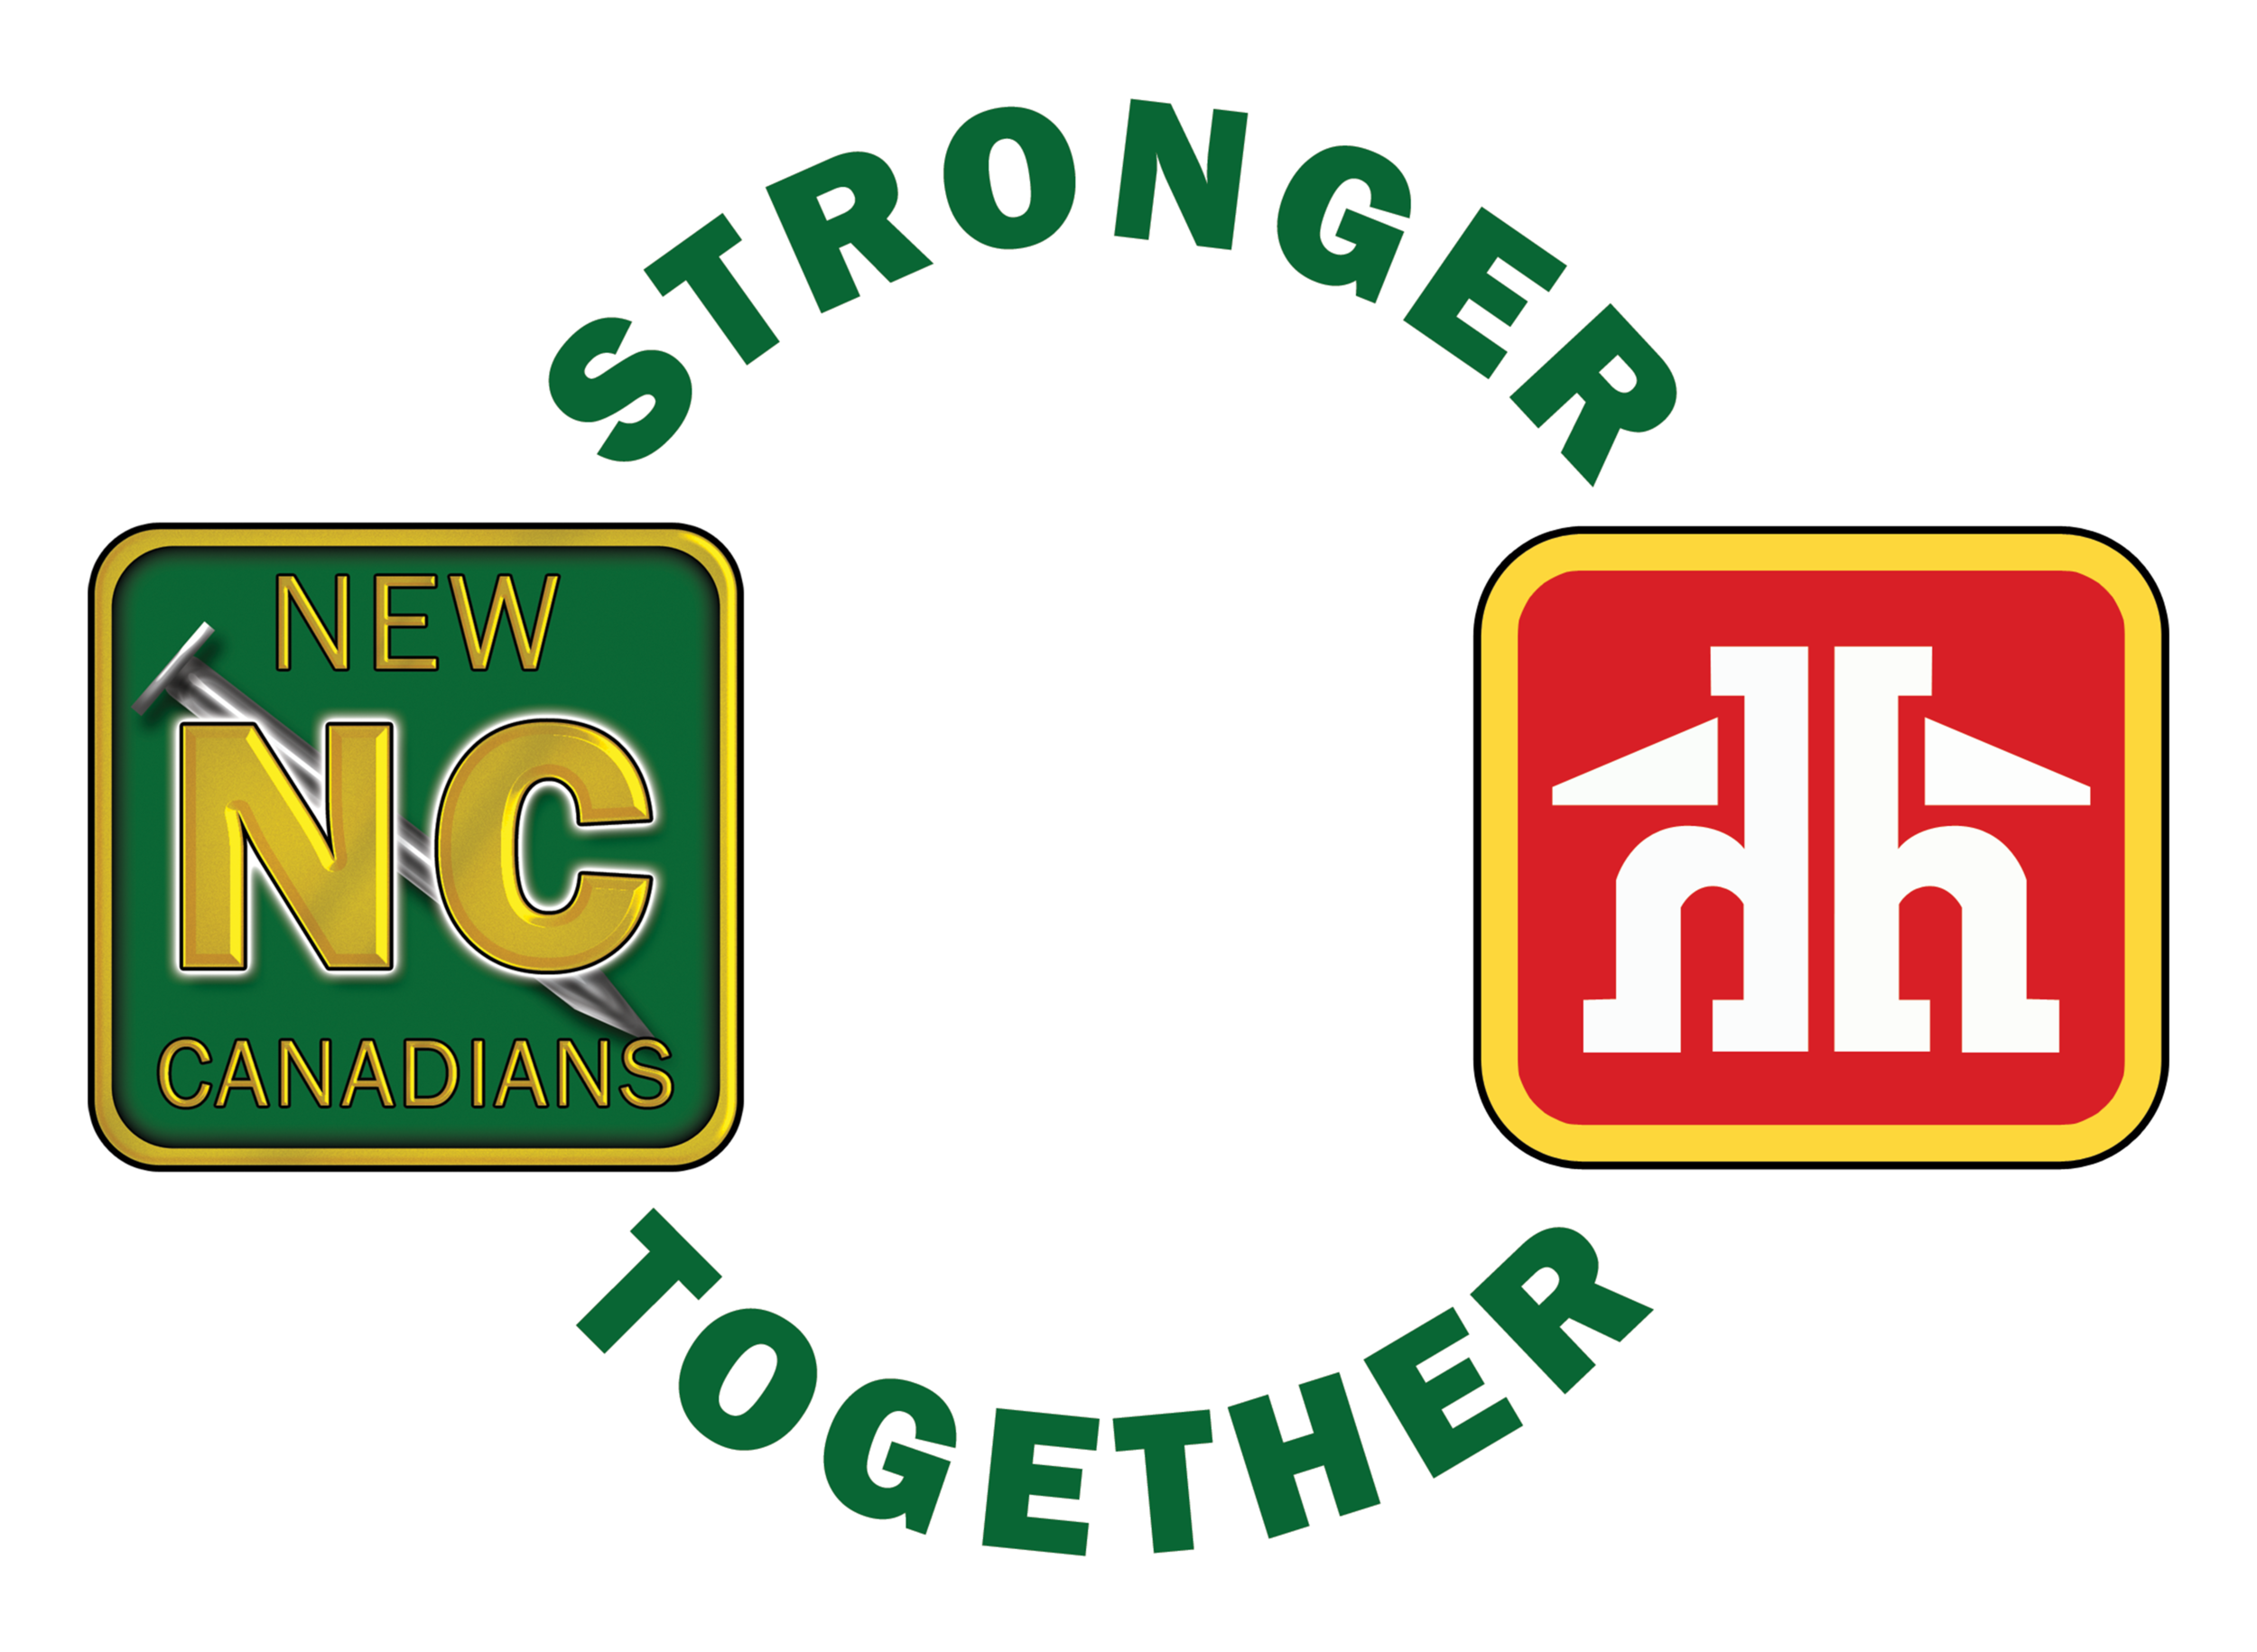 New Canadian's Lumber logo